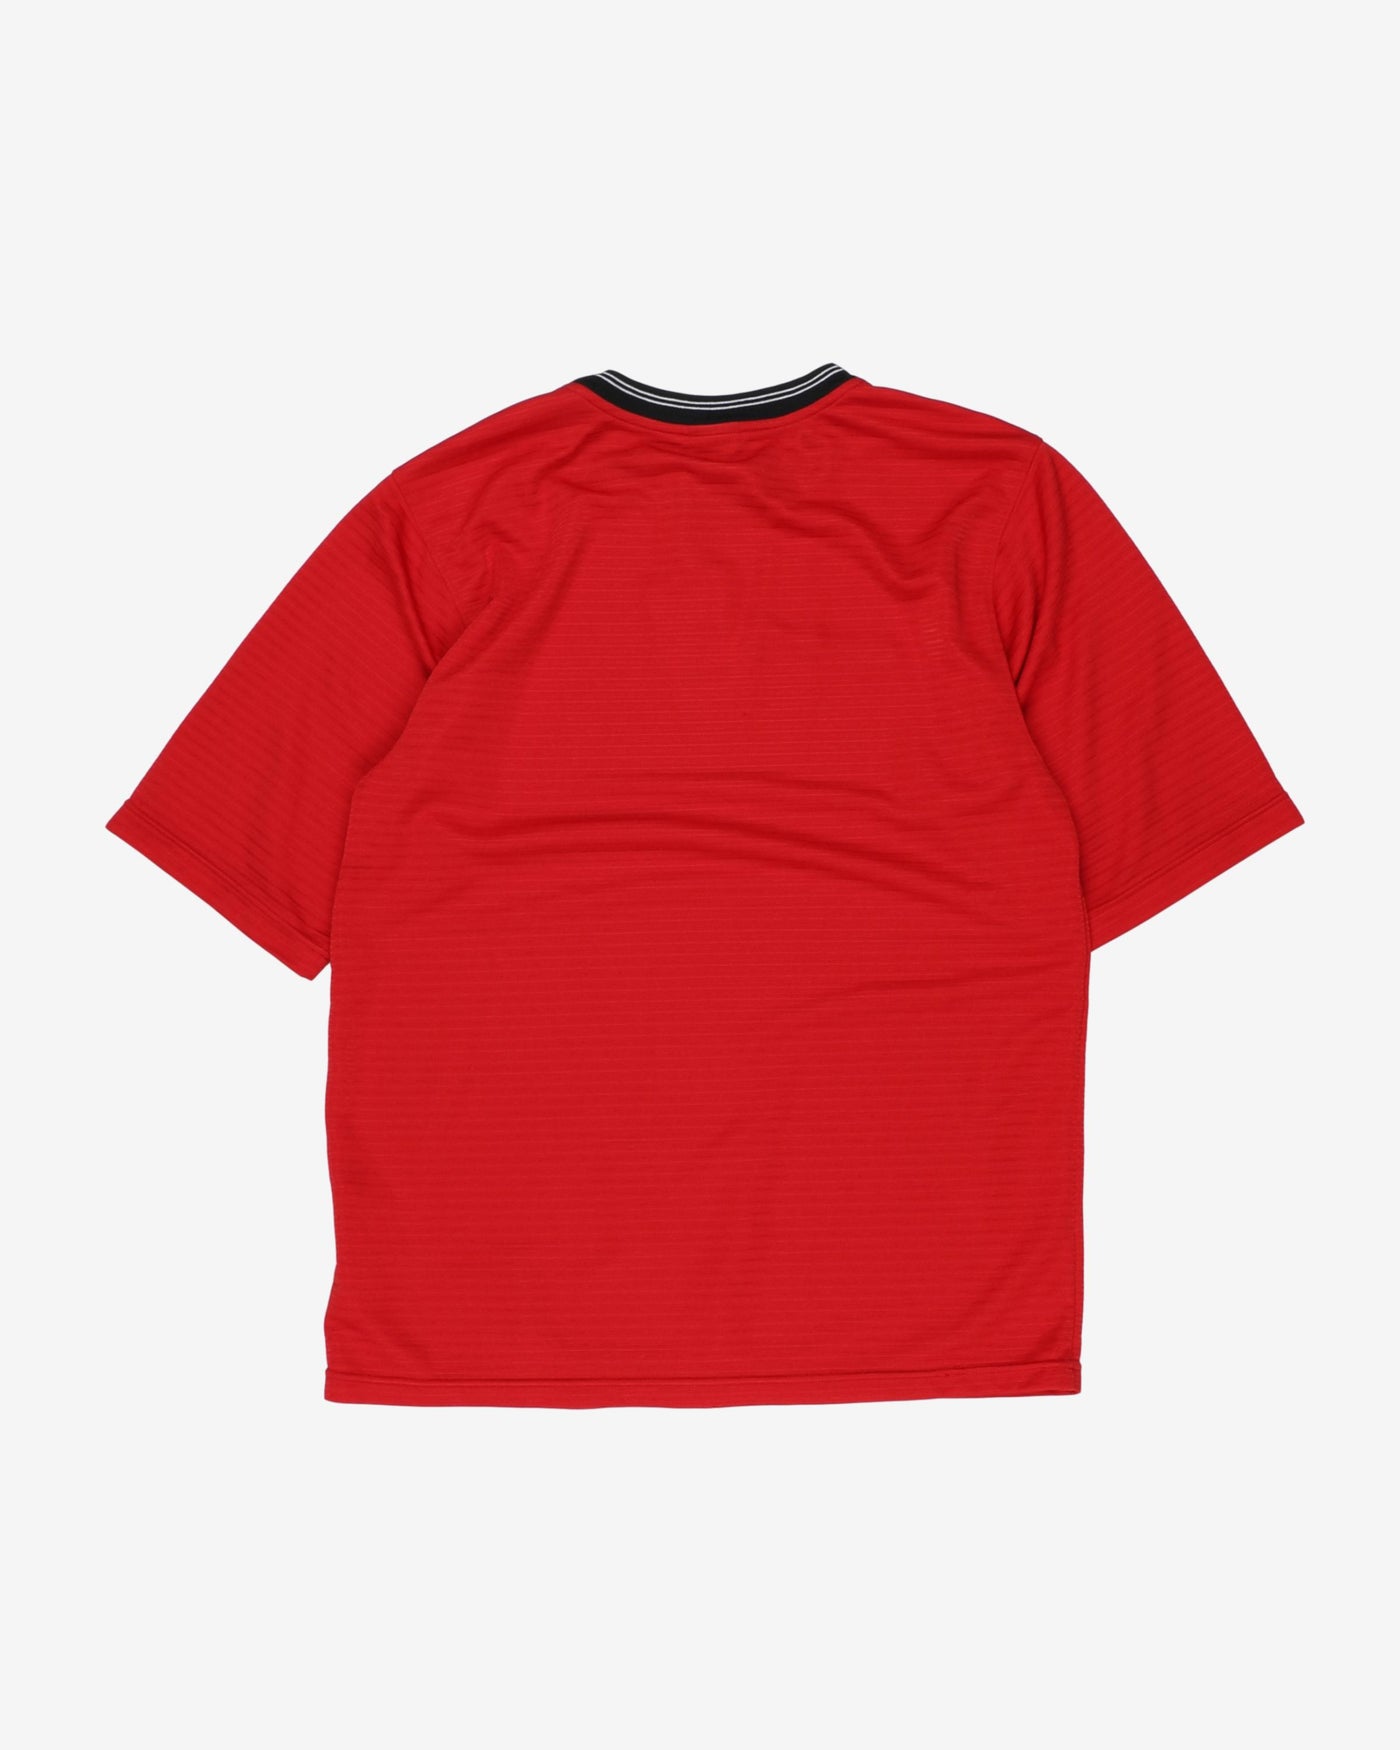 00s Plain Red Nike Football Training Shirt - S